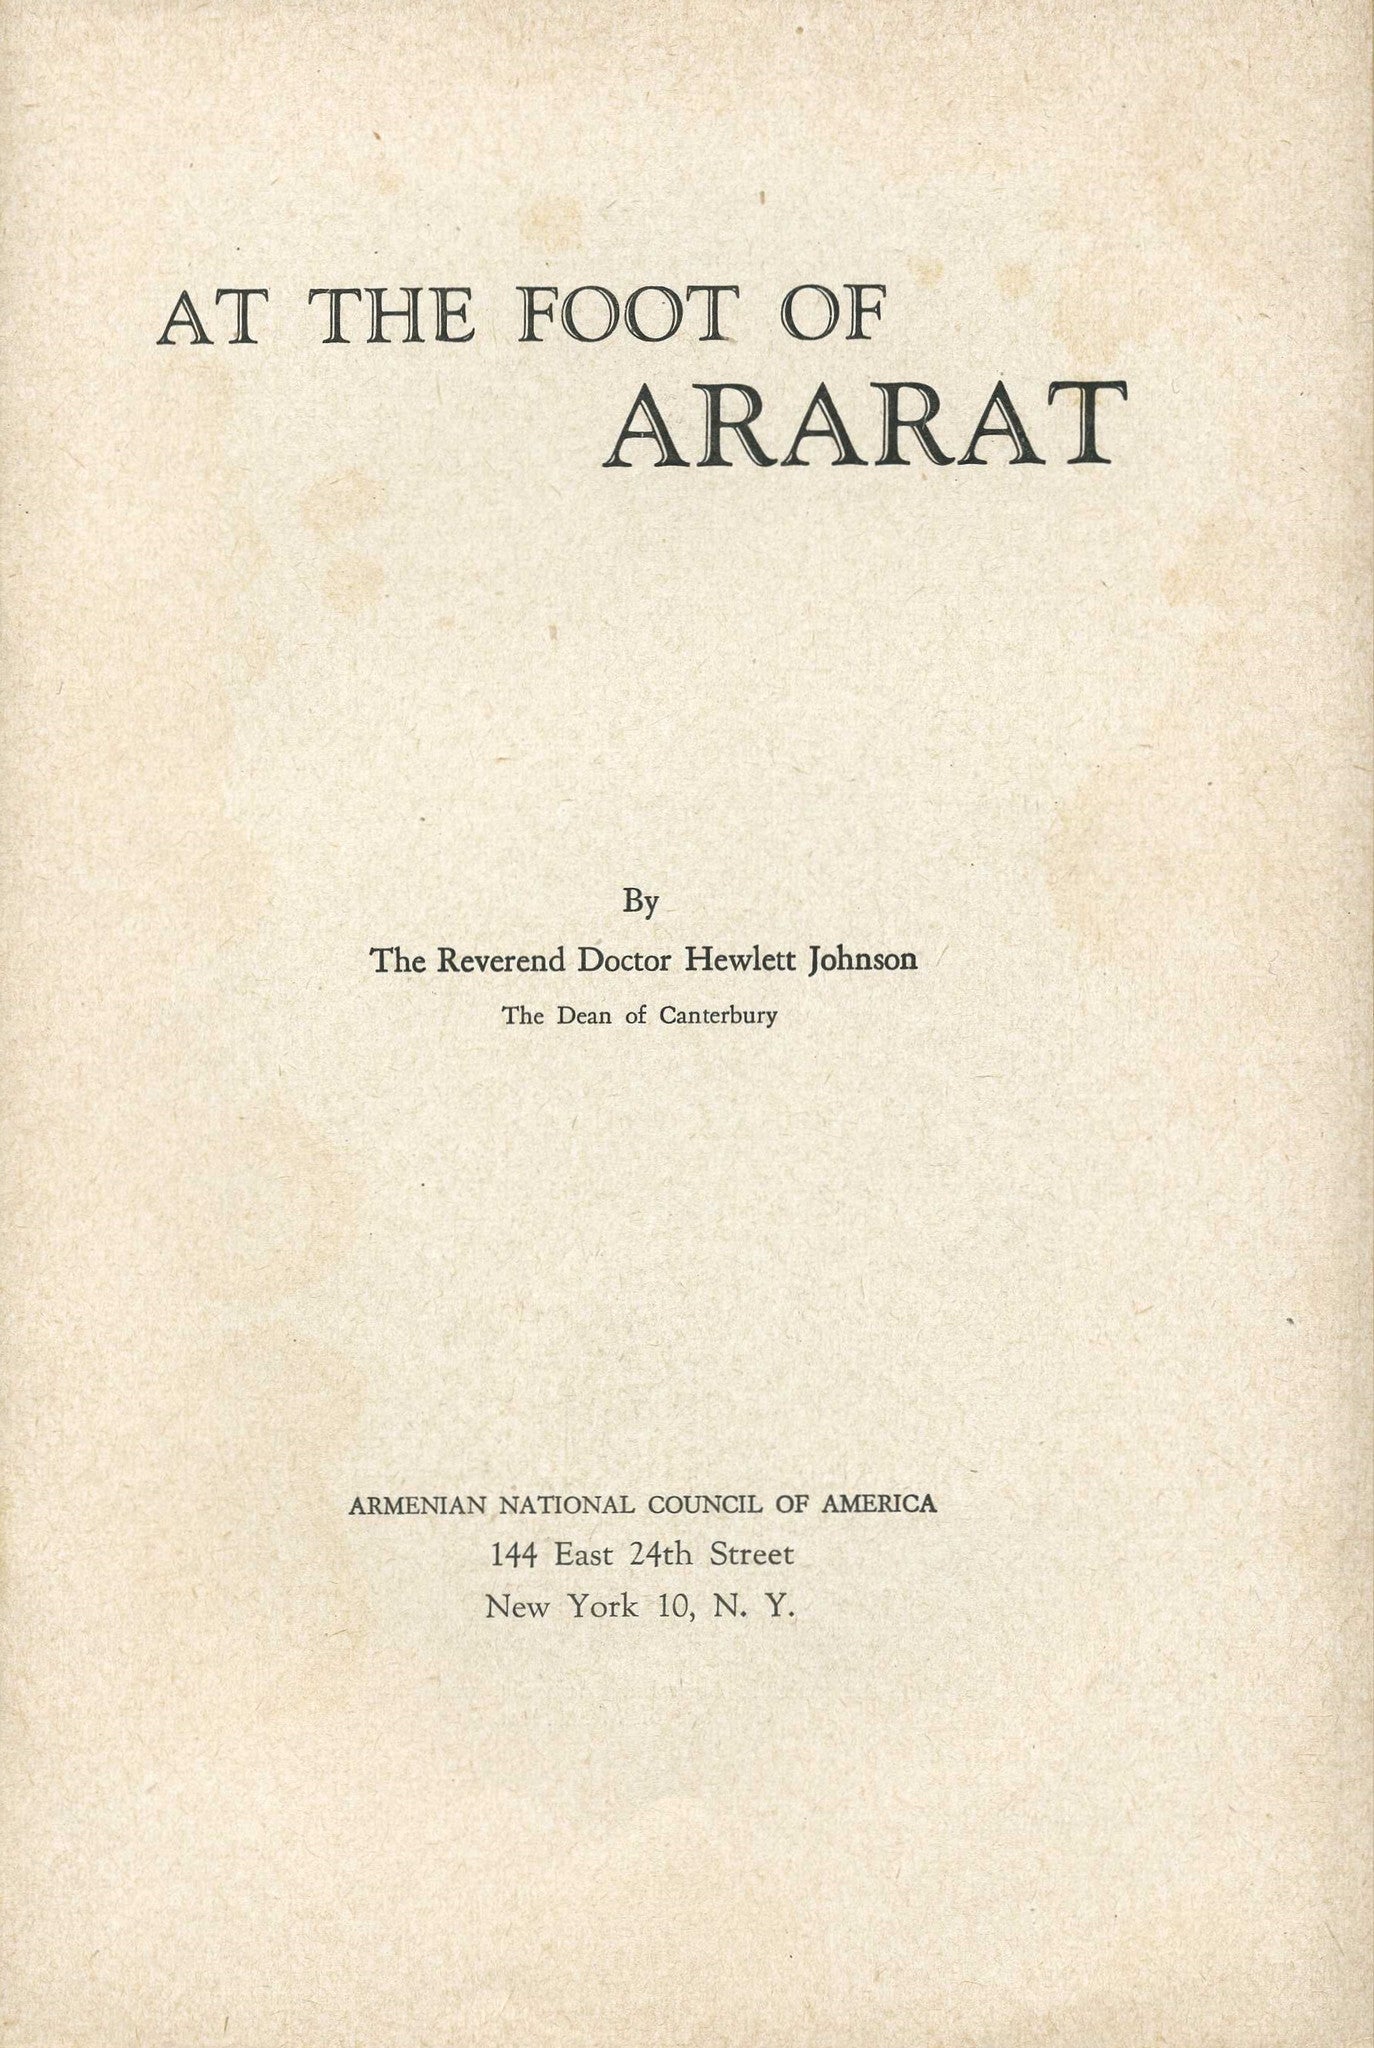 AT THE FOOT OF ARARAT